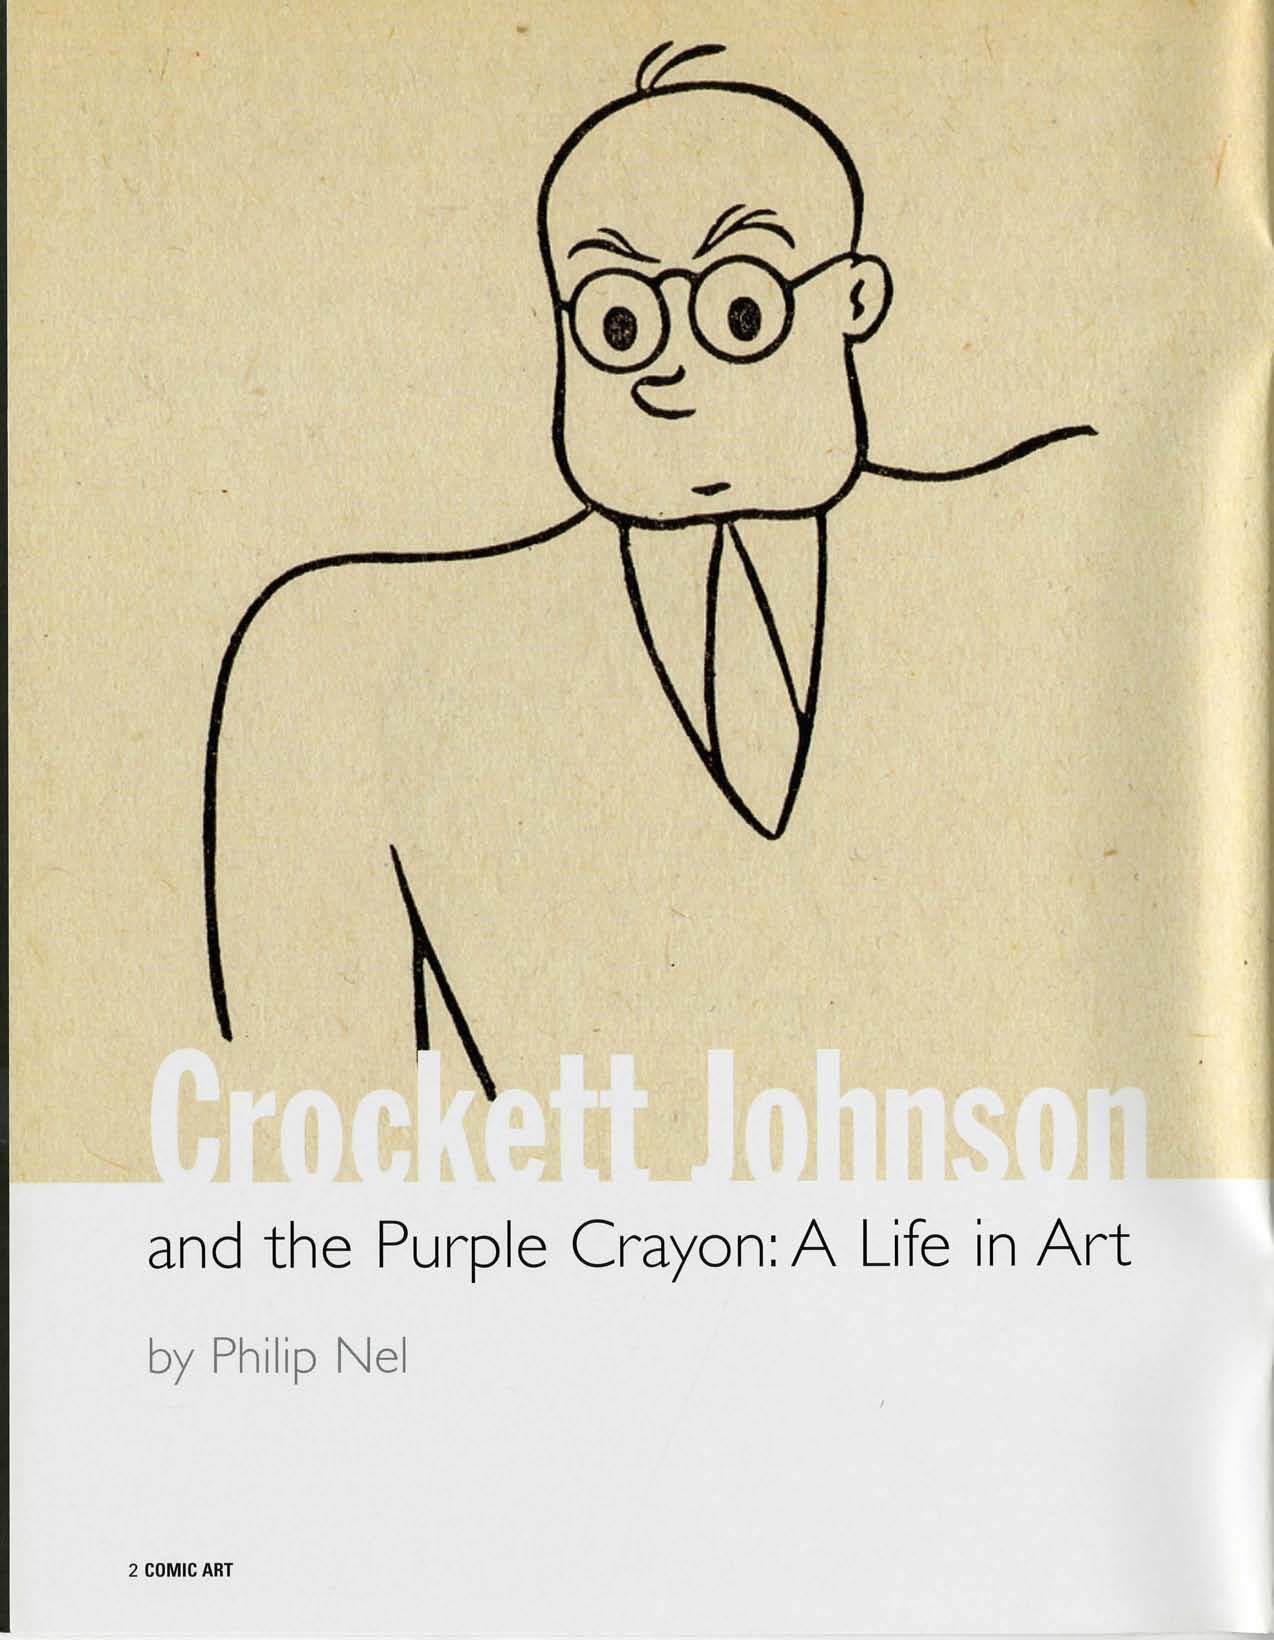 Philip Nel, "Crockett Johnson and the Purple Crayon: A Life in Art," Comic Art 5 (Winter 2004), p. 2